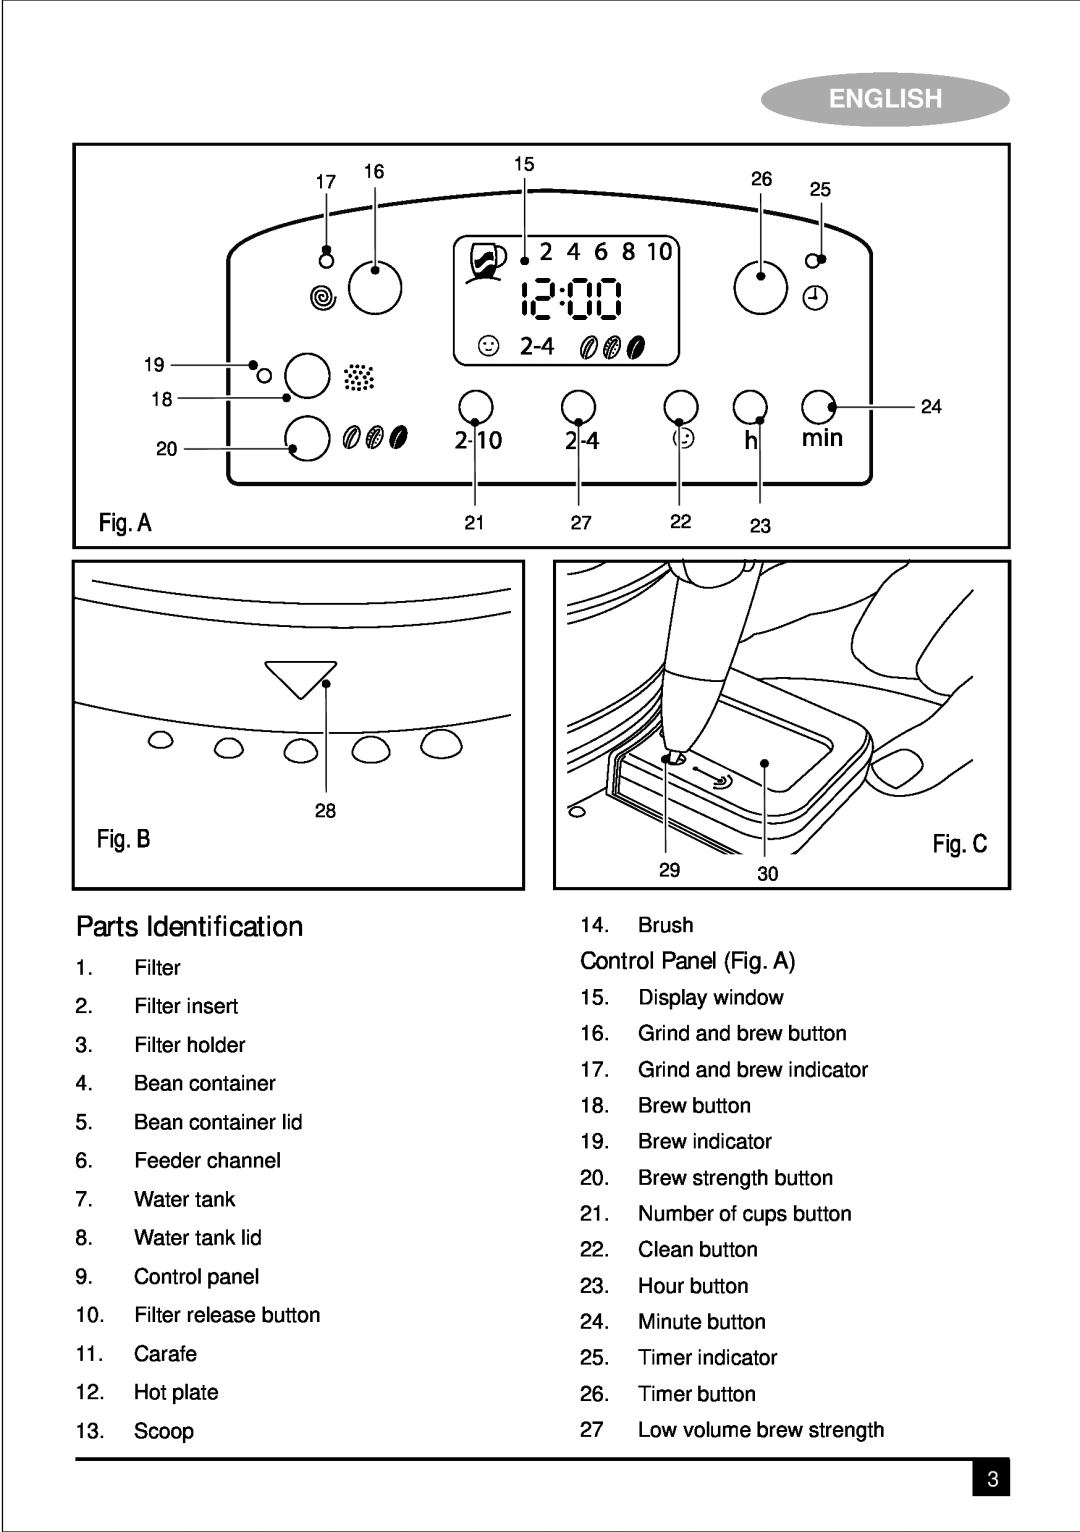 Black & Decker PRCM500 manual Parts Identification, English 